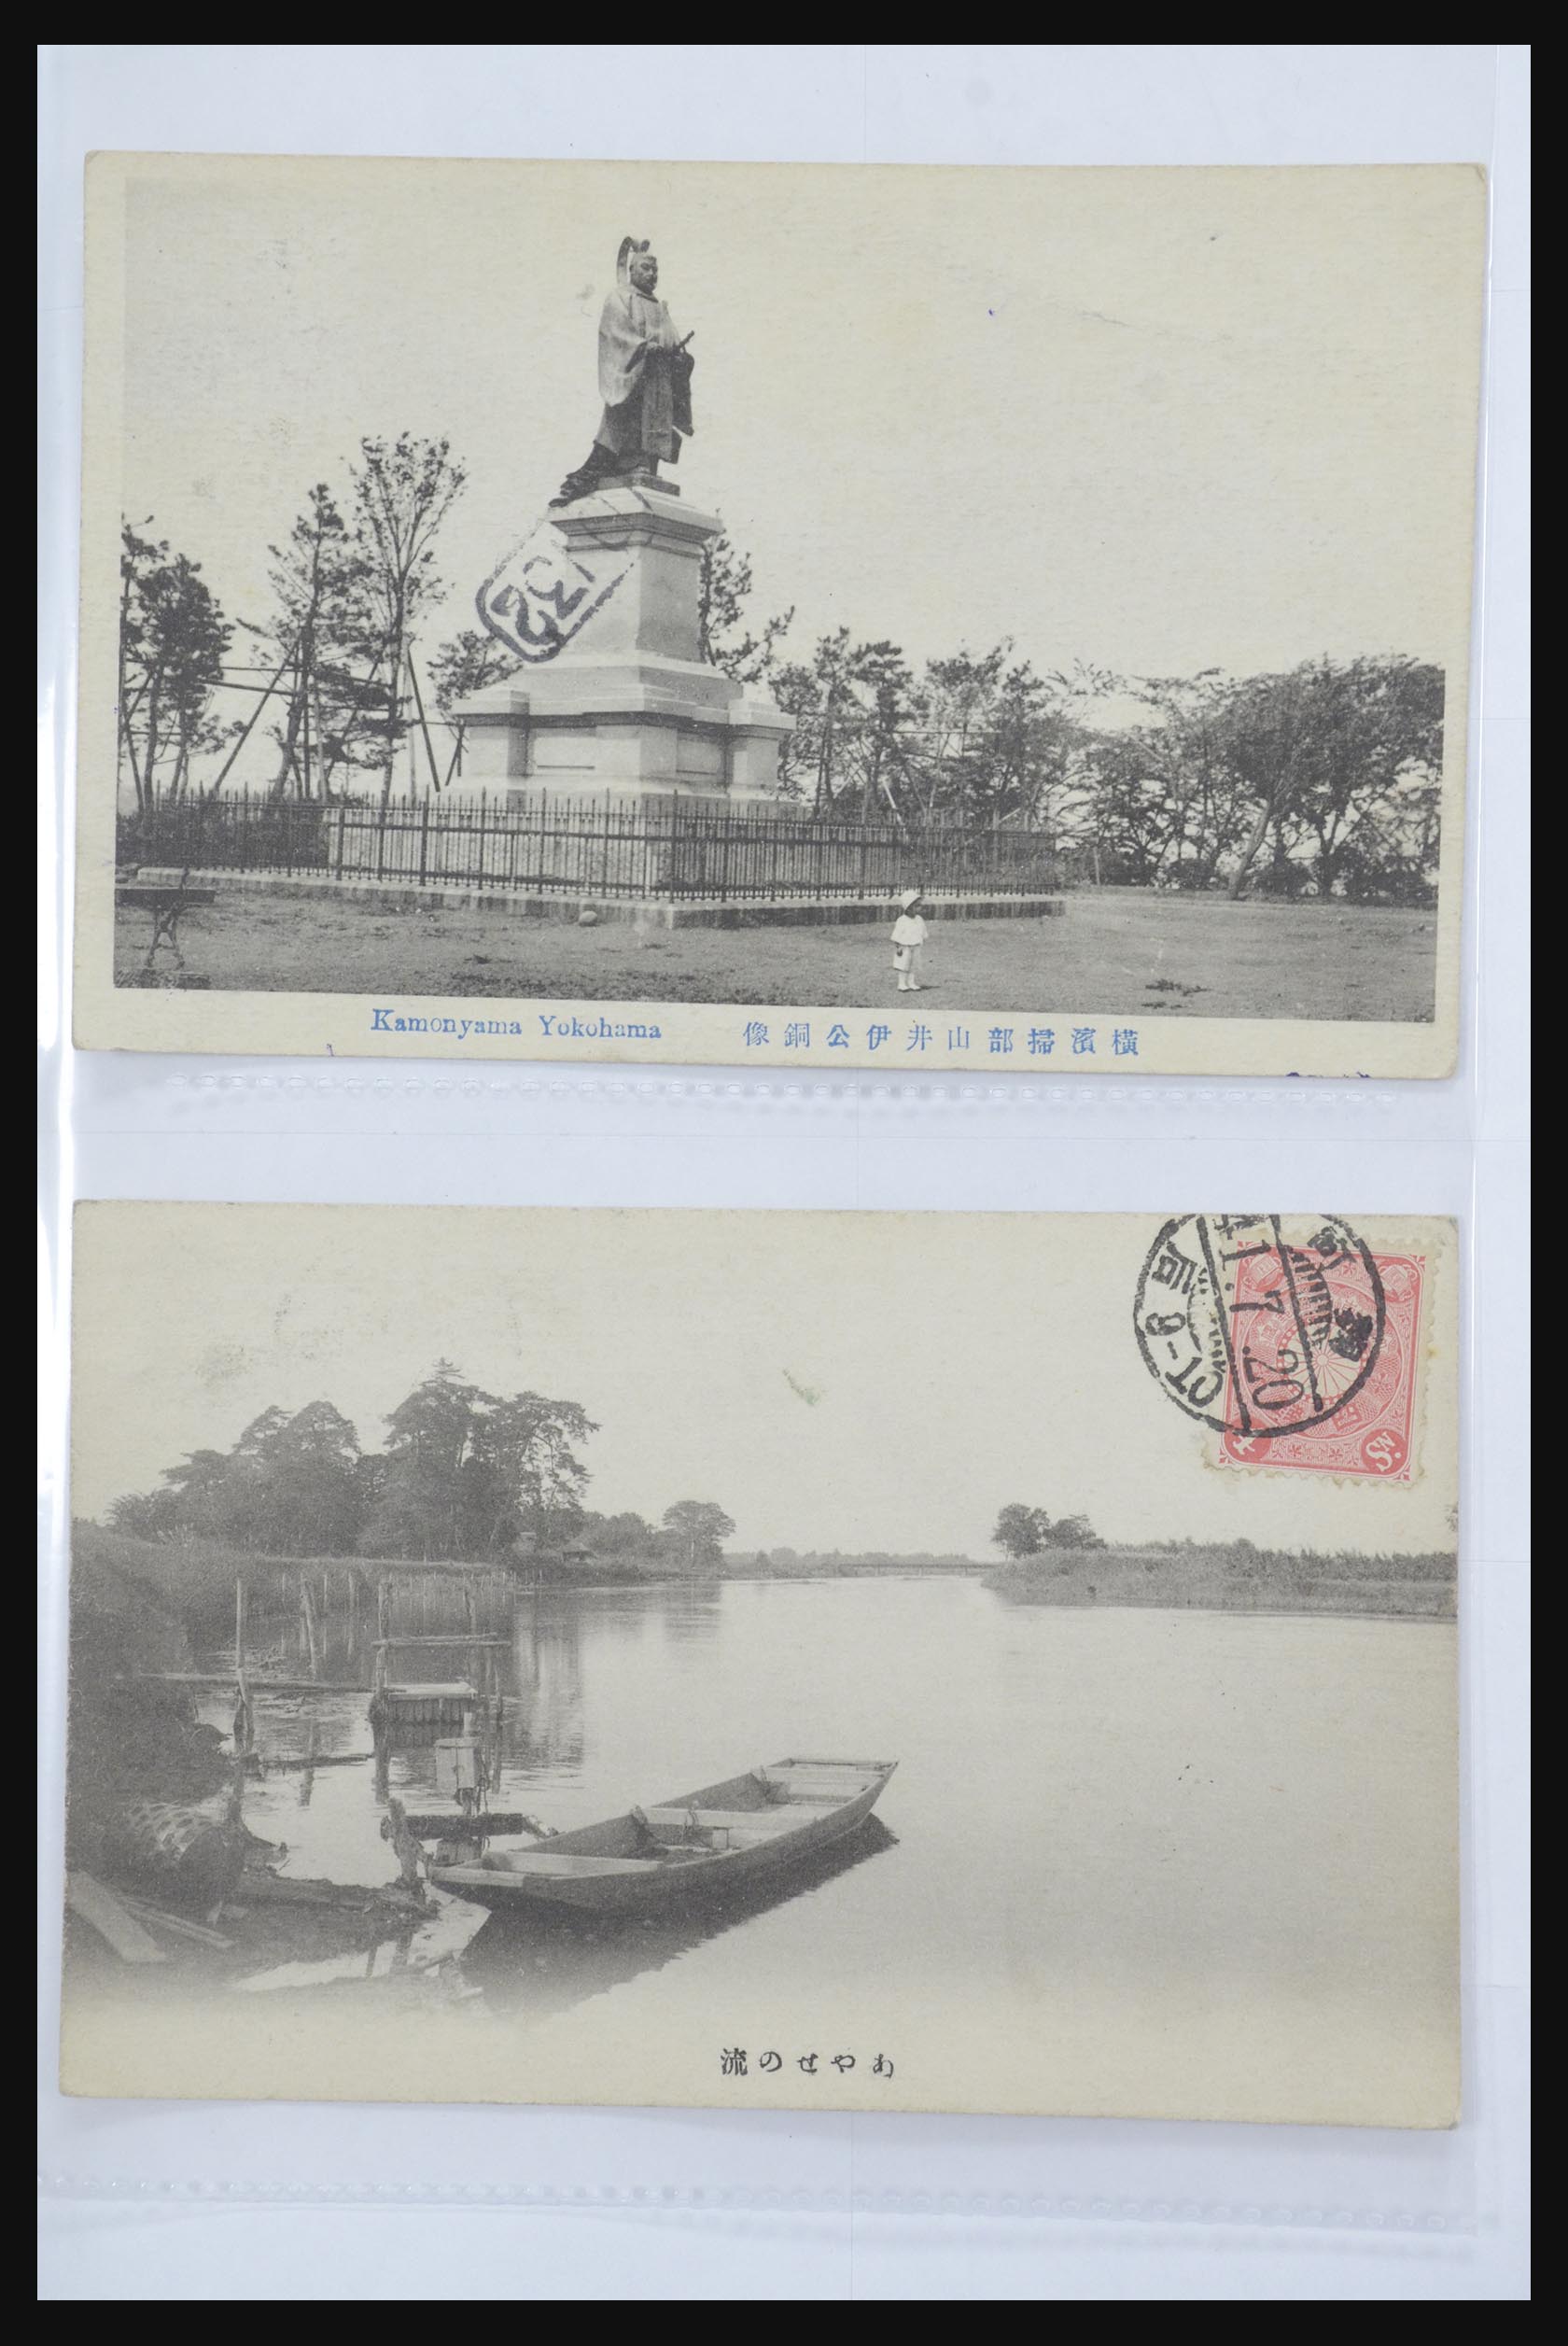 31667 049 - 31667 Japan picture postcards 1900-1920.